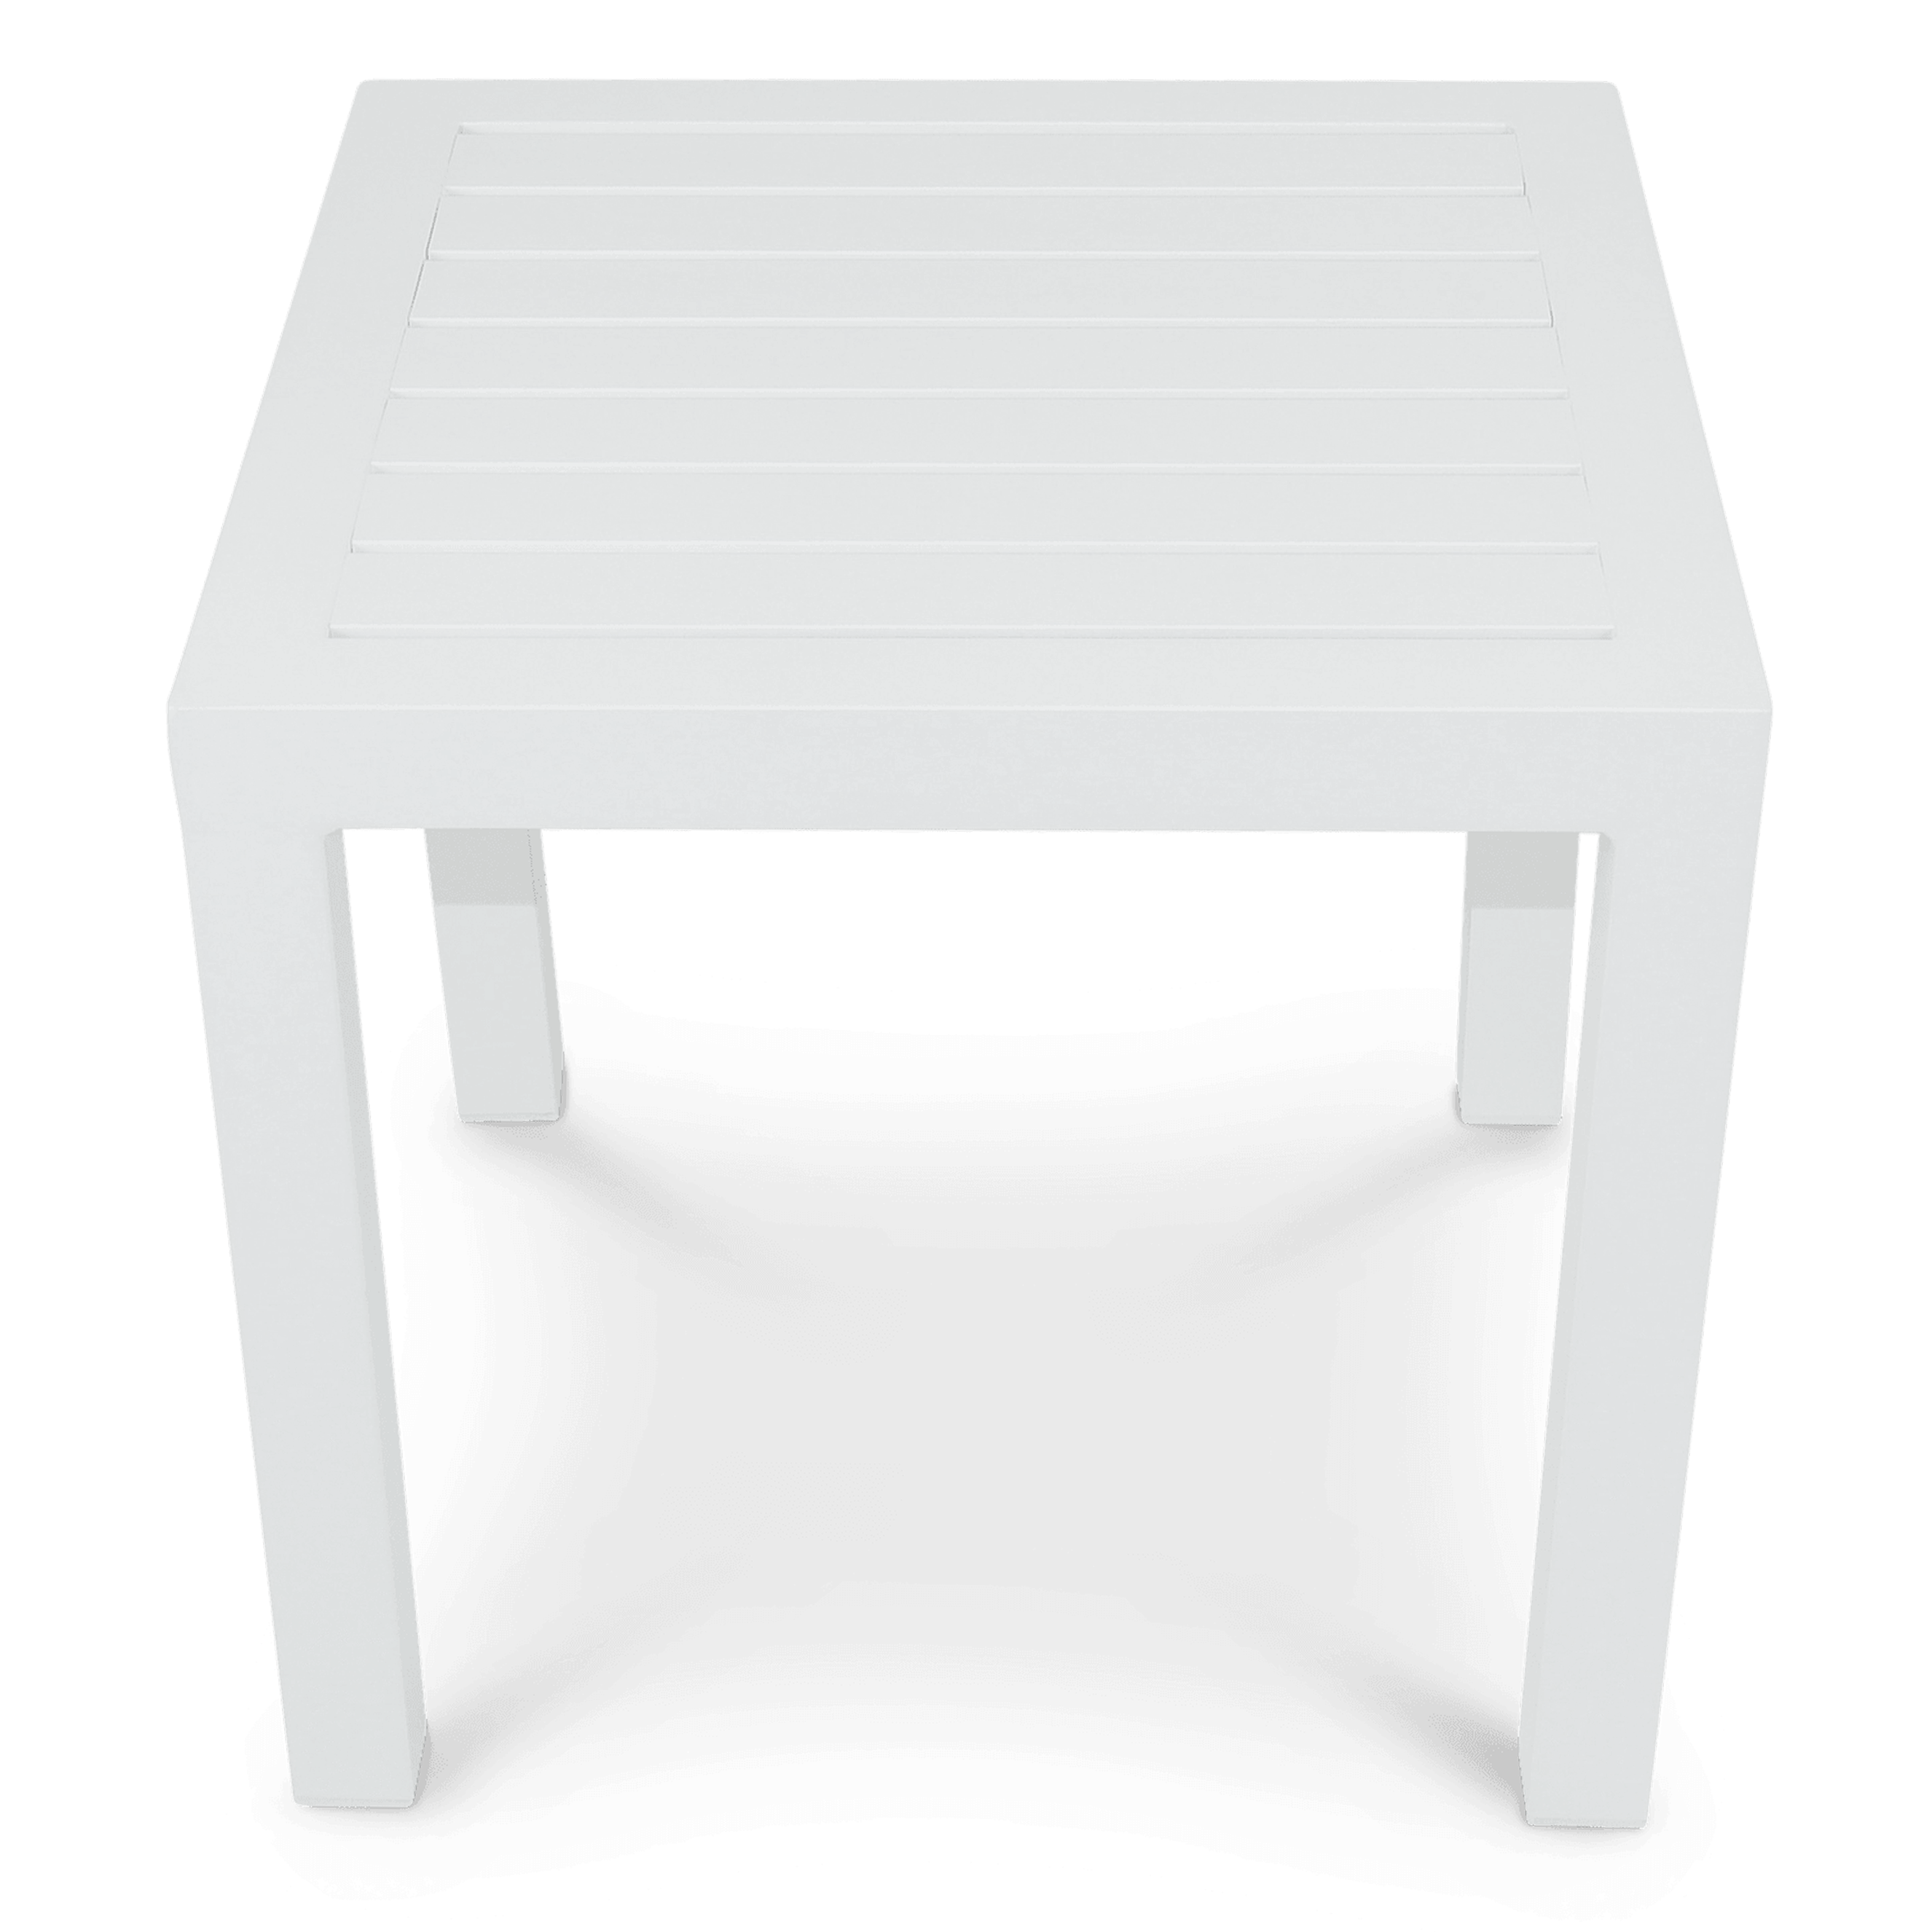 San Sebastian Side Table in Arctic White